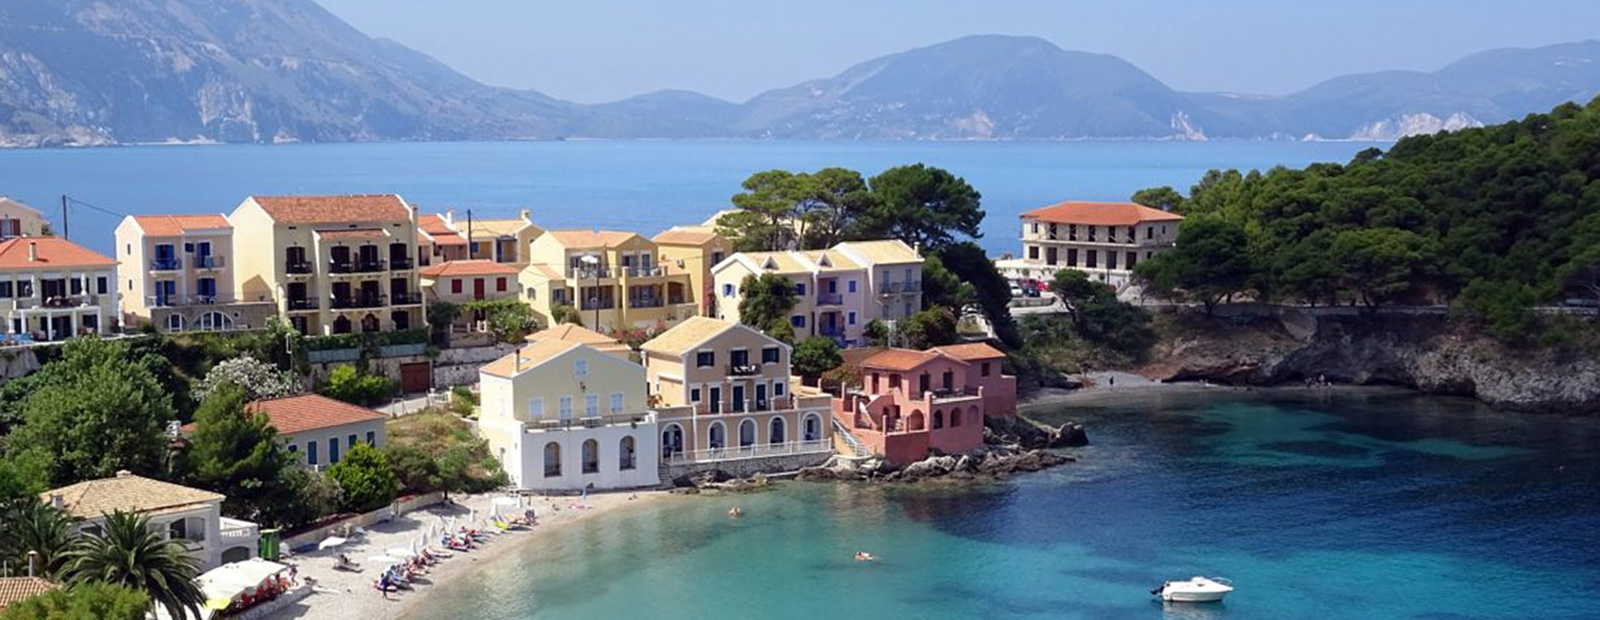 Holiday villa rental Cephalonia